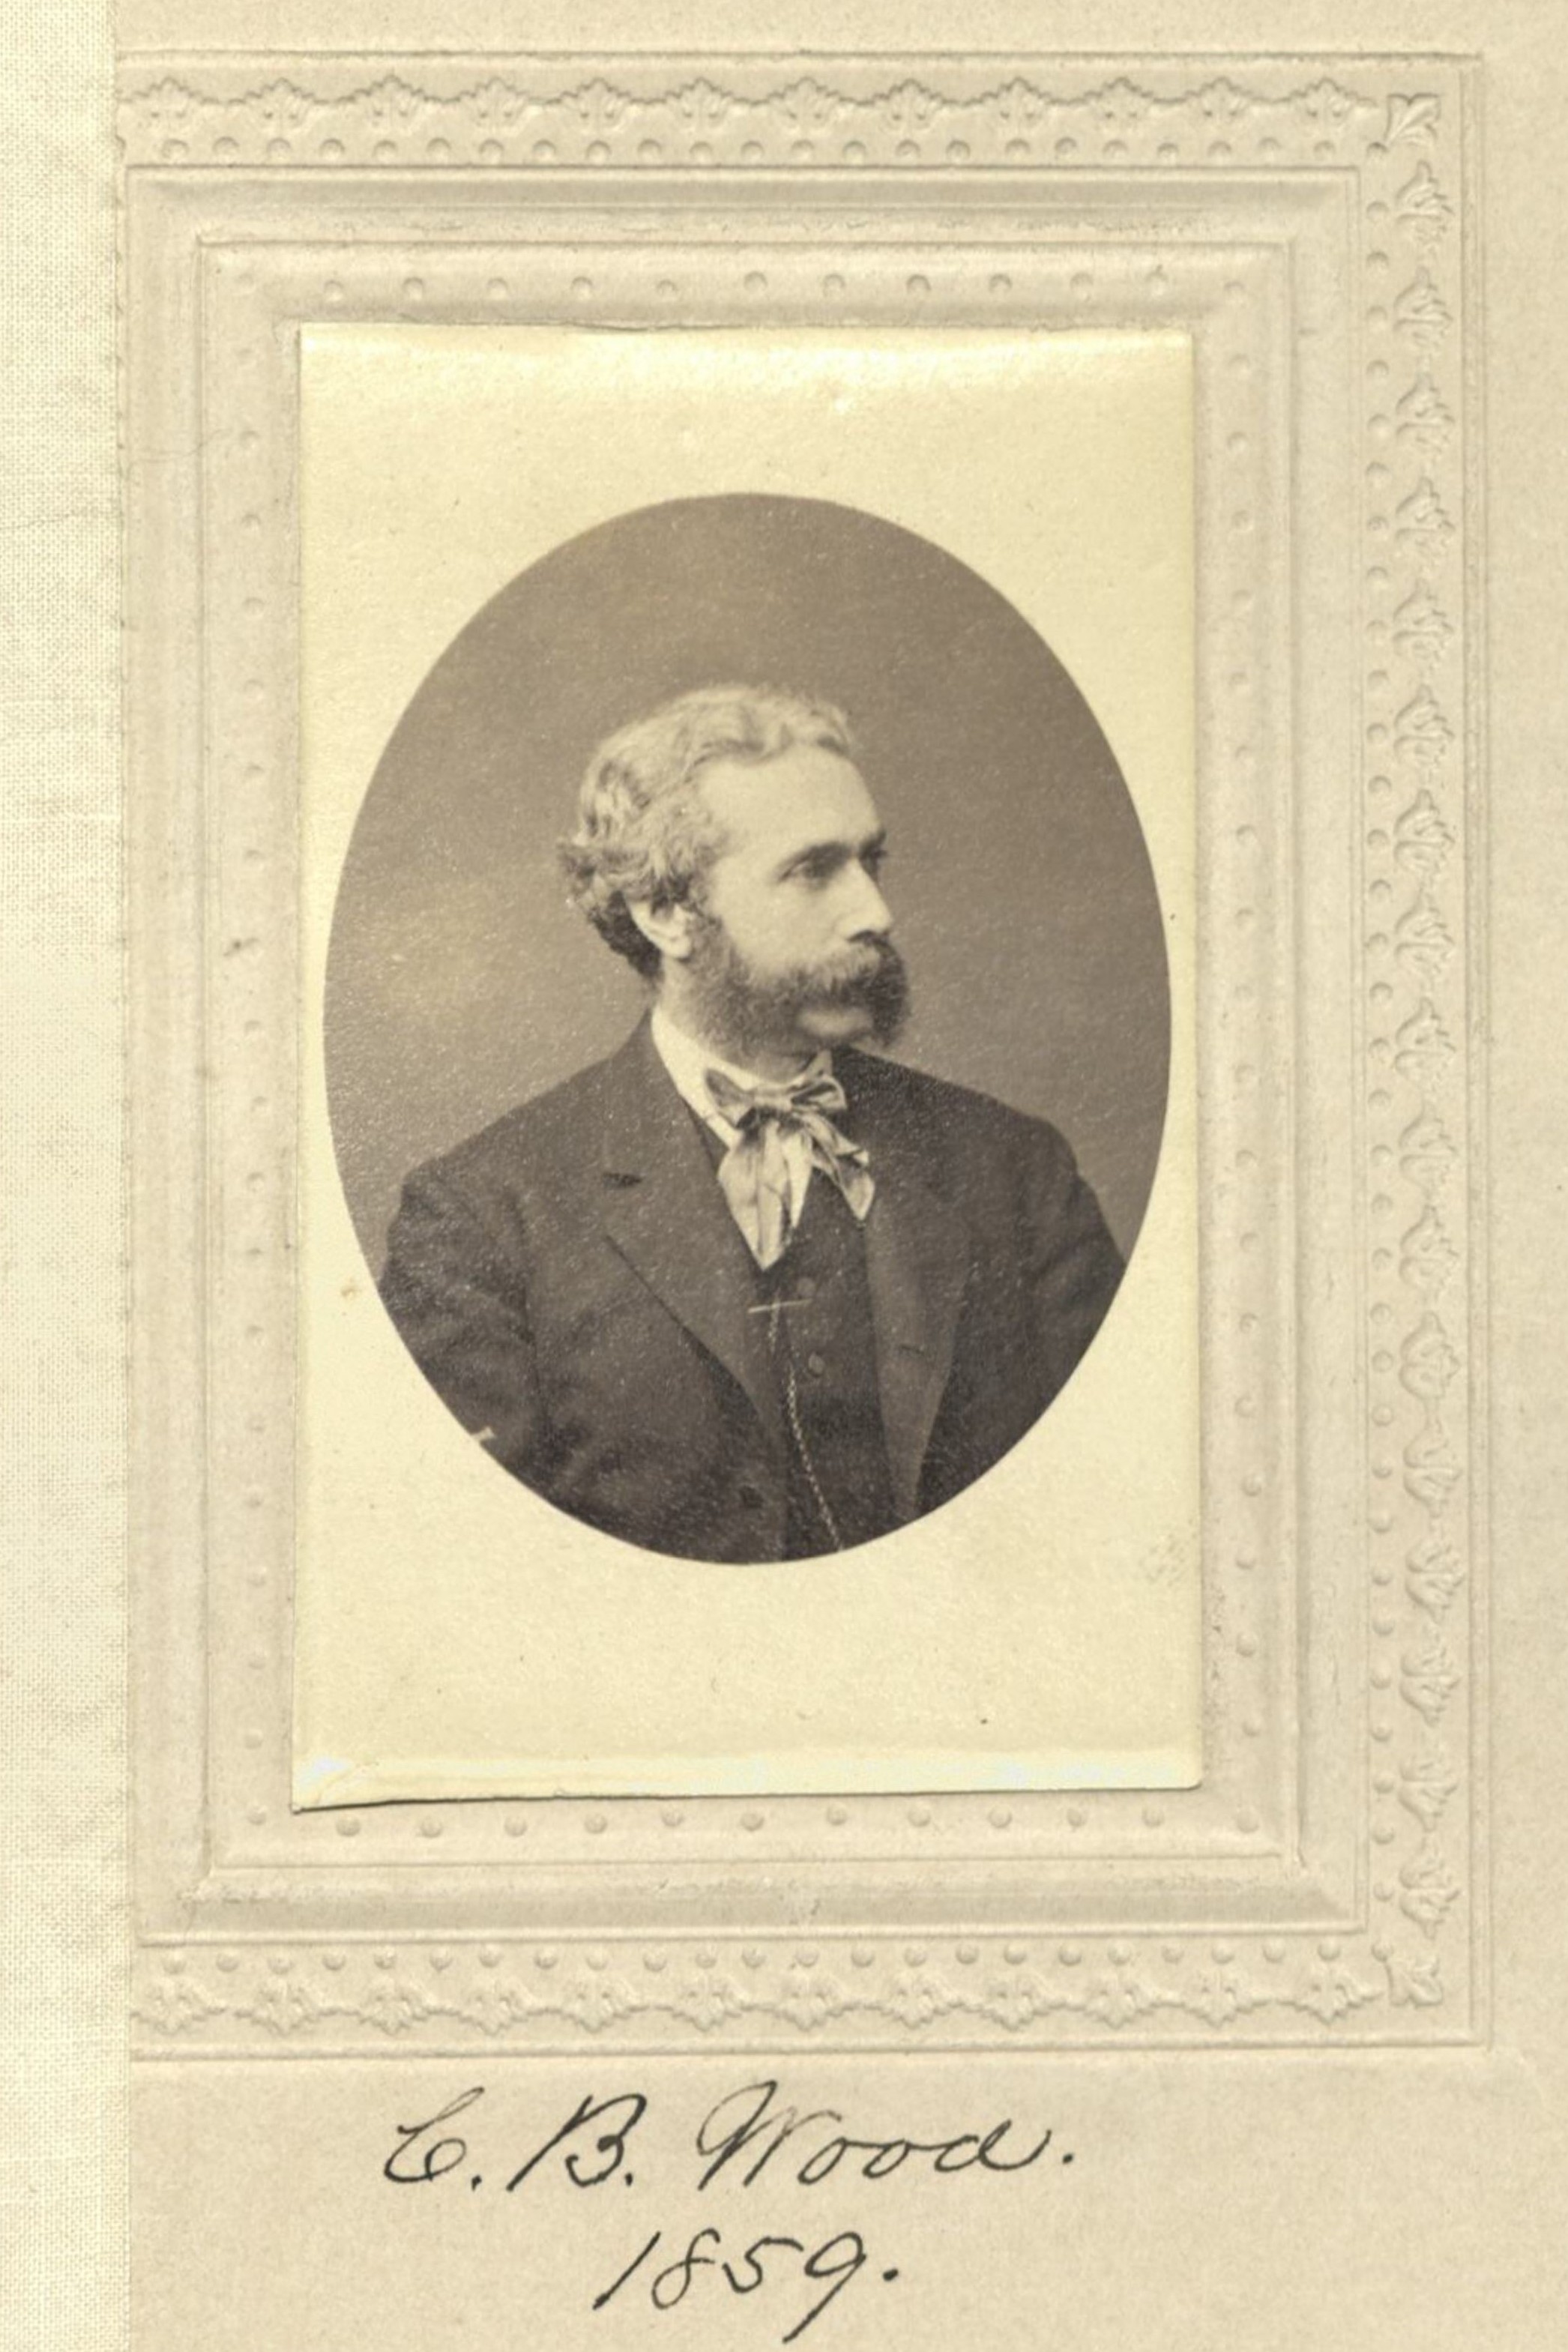 Member portrait of Charles B. Wood